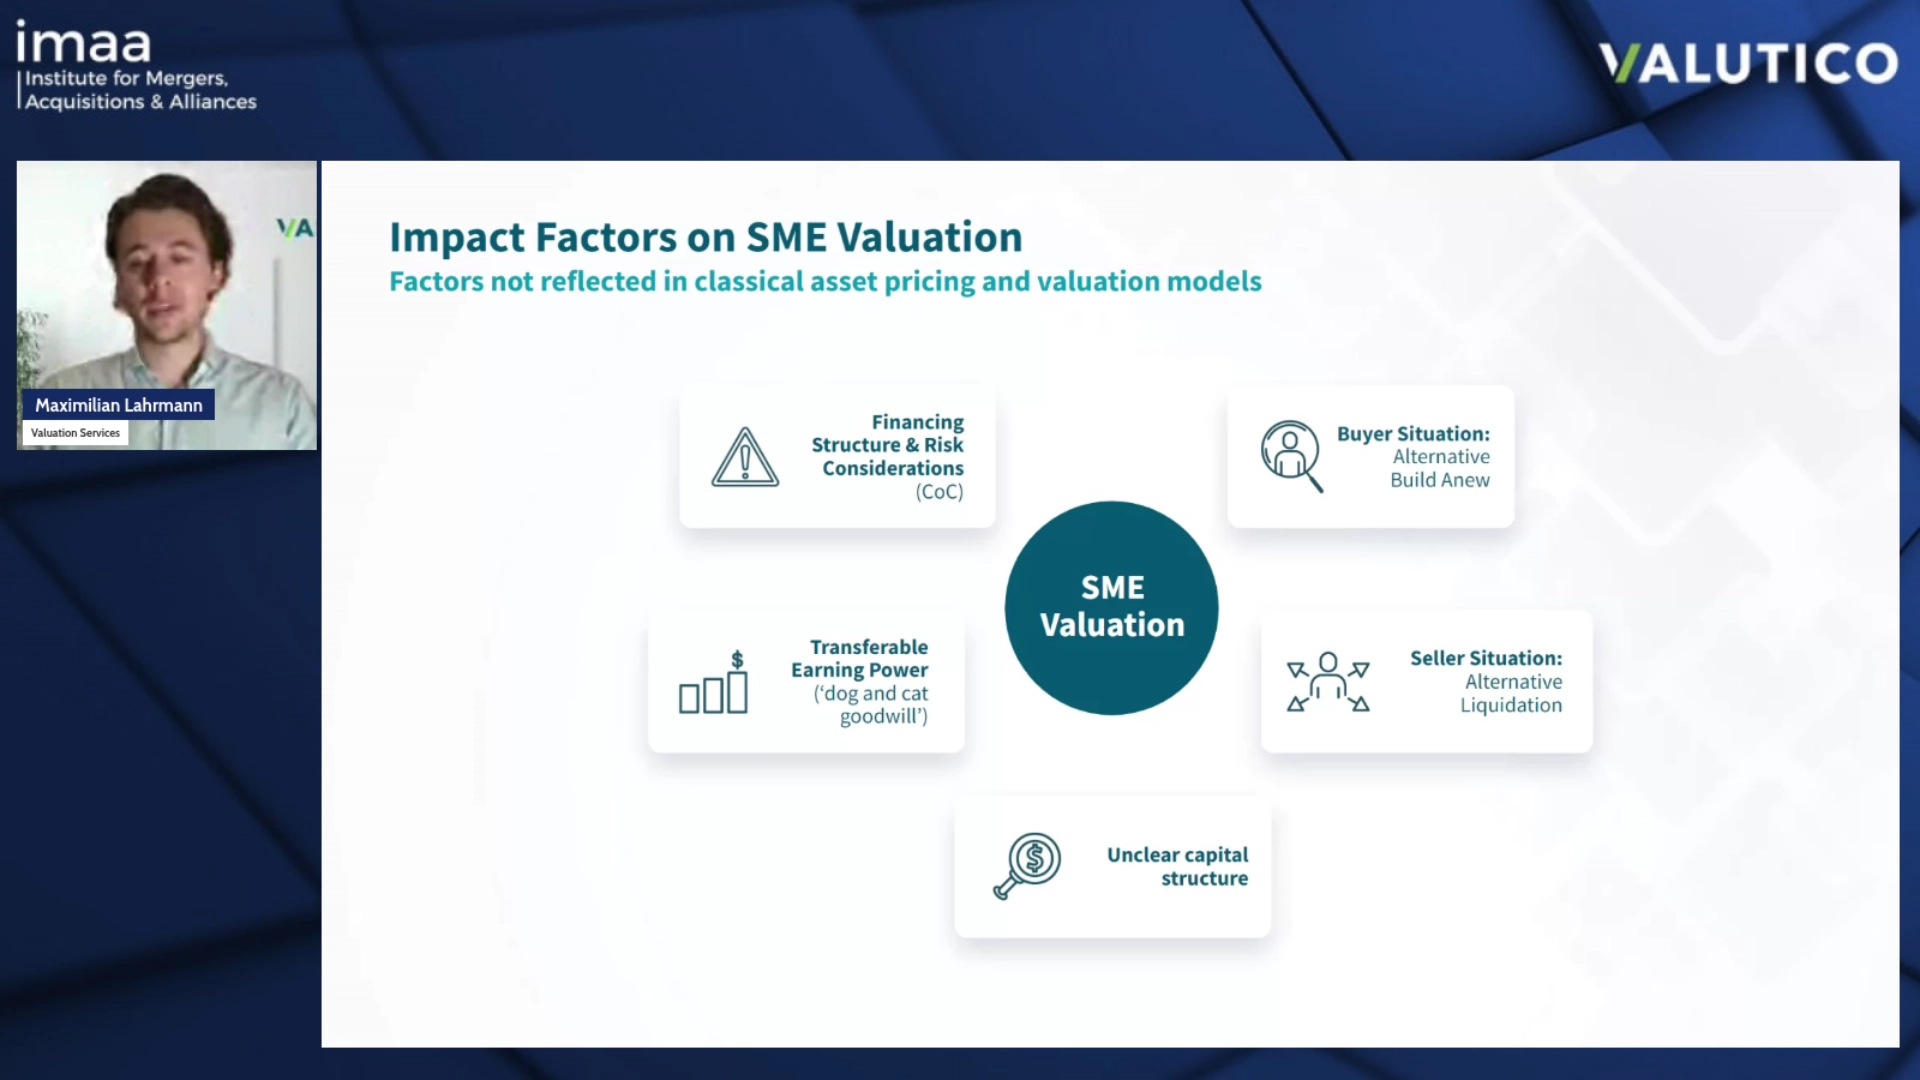 Maximilian Lahrmann discussing the impact factors on SME valuation